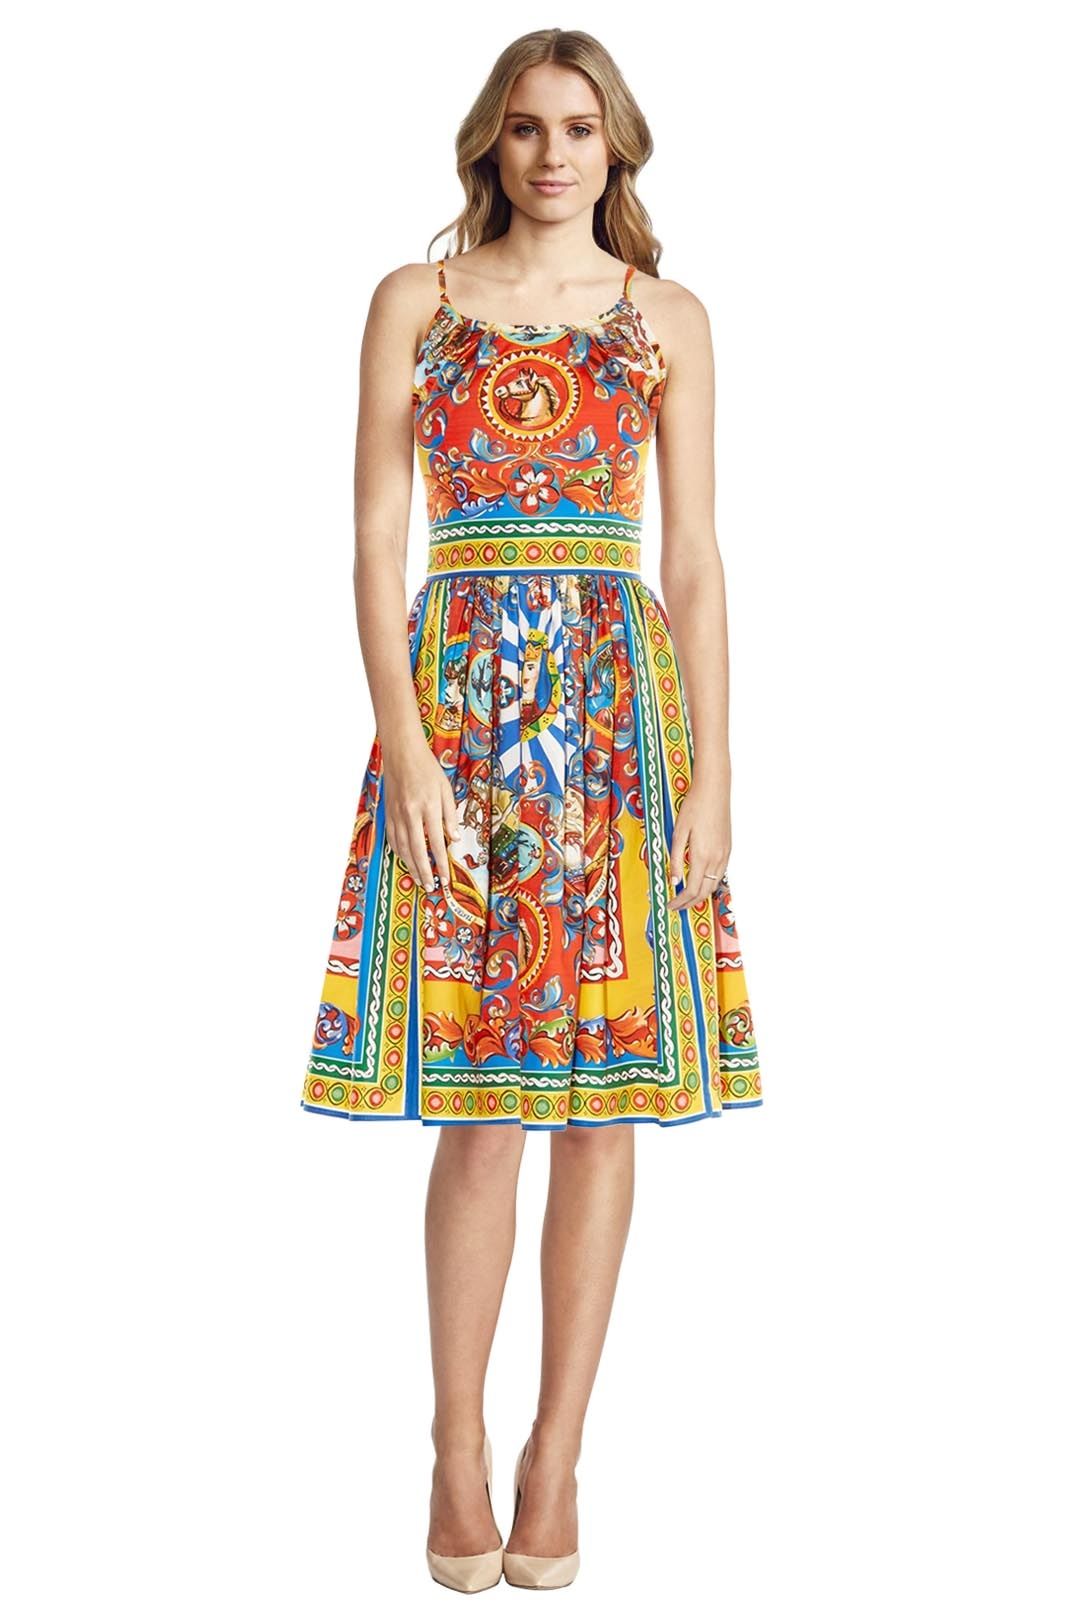 Dolce & Gabbana - Carretto Print Sleeveless Dress - Prints - Front